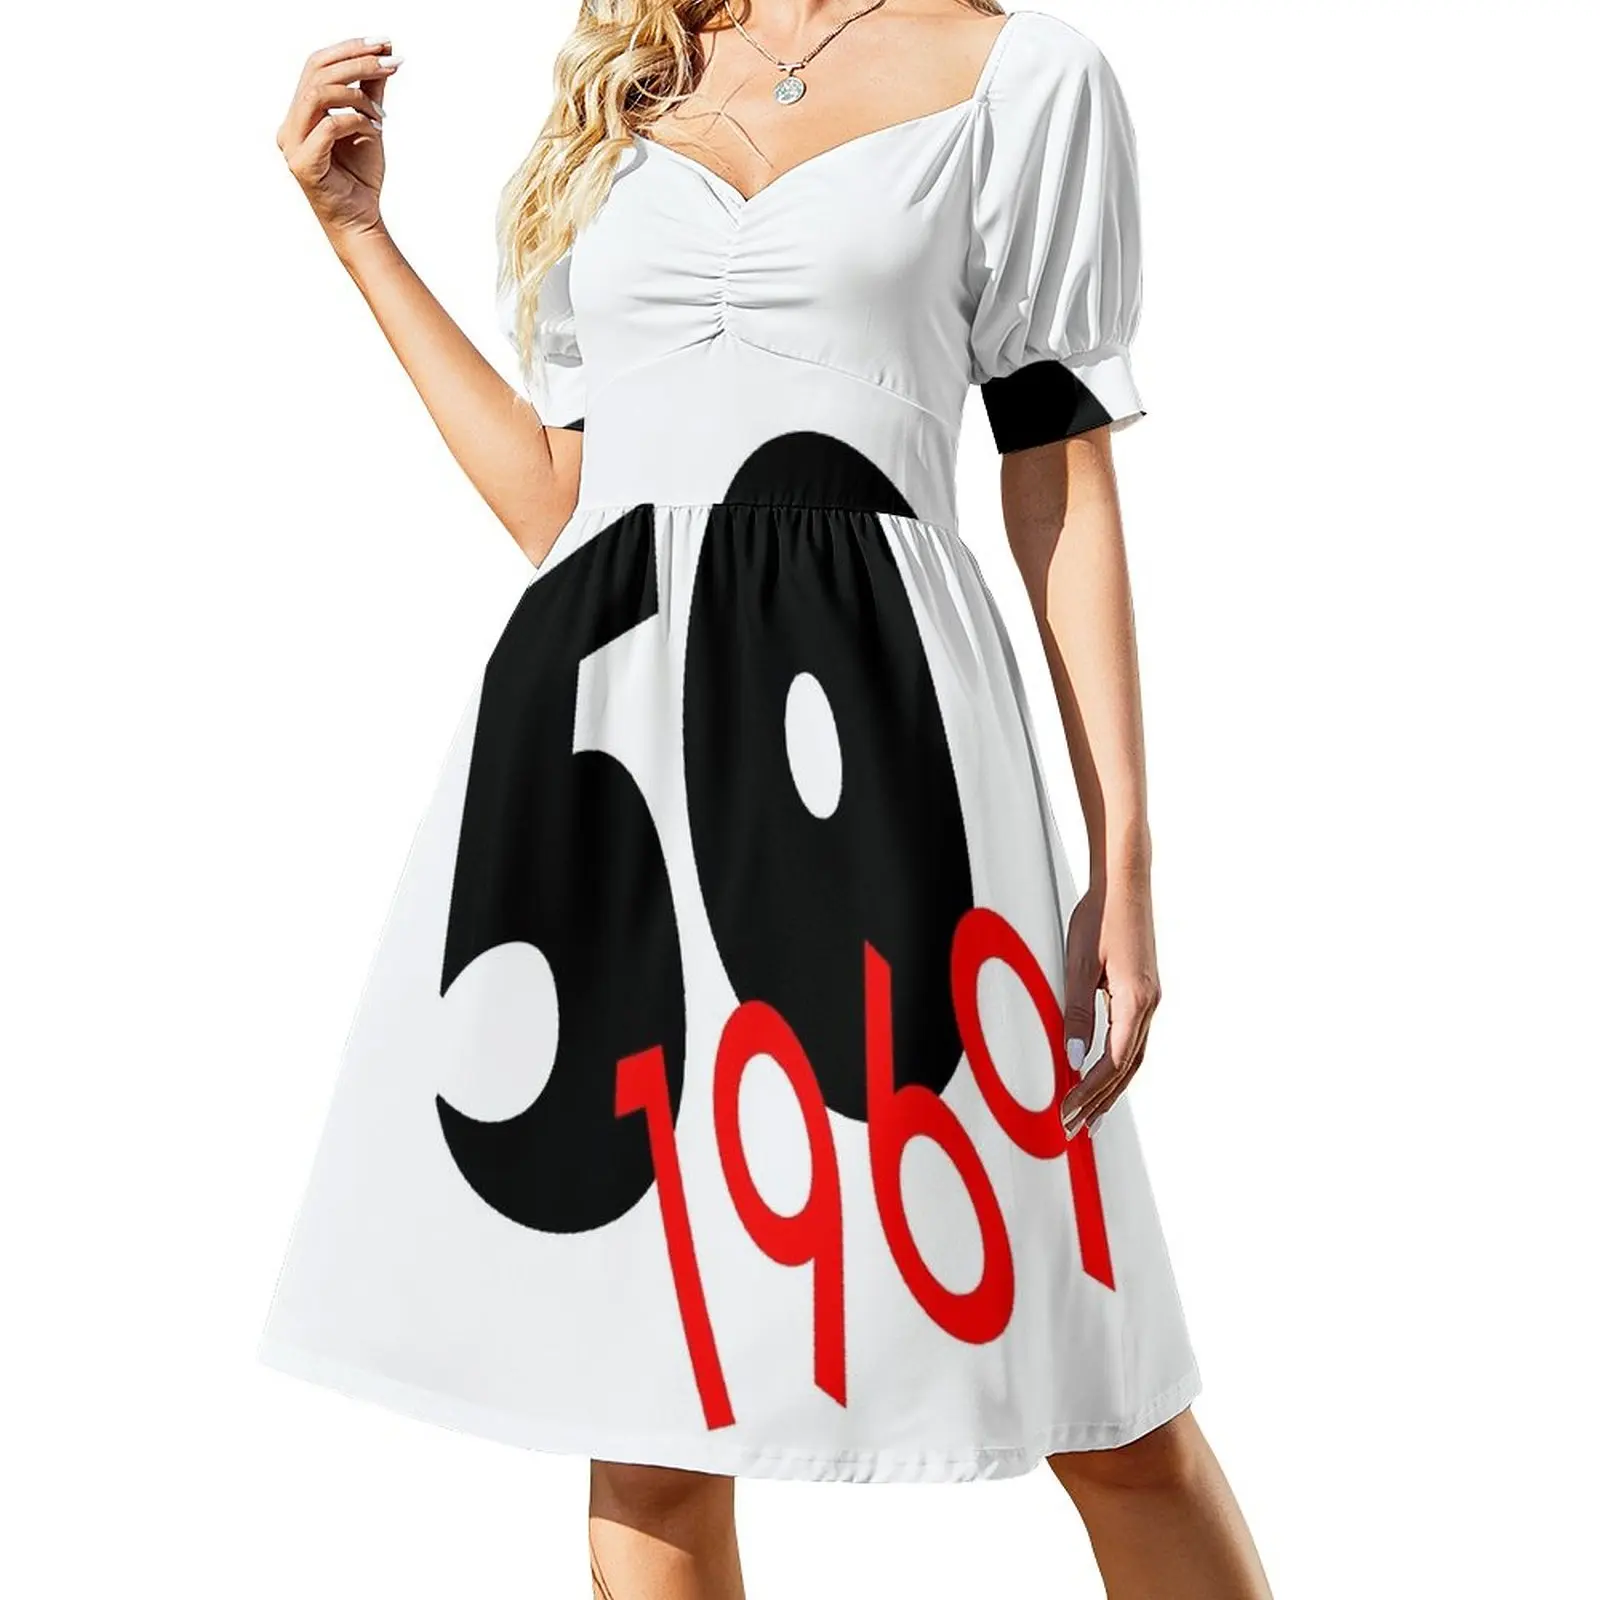 

50-1969 - a celebration of 50 years Dress summer dresses womens 2023 Women's summer suit sexy dress